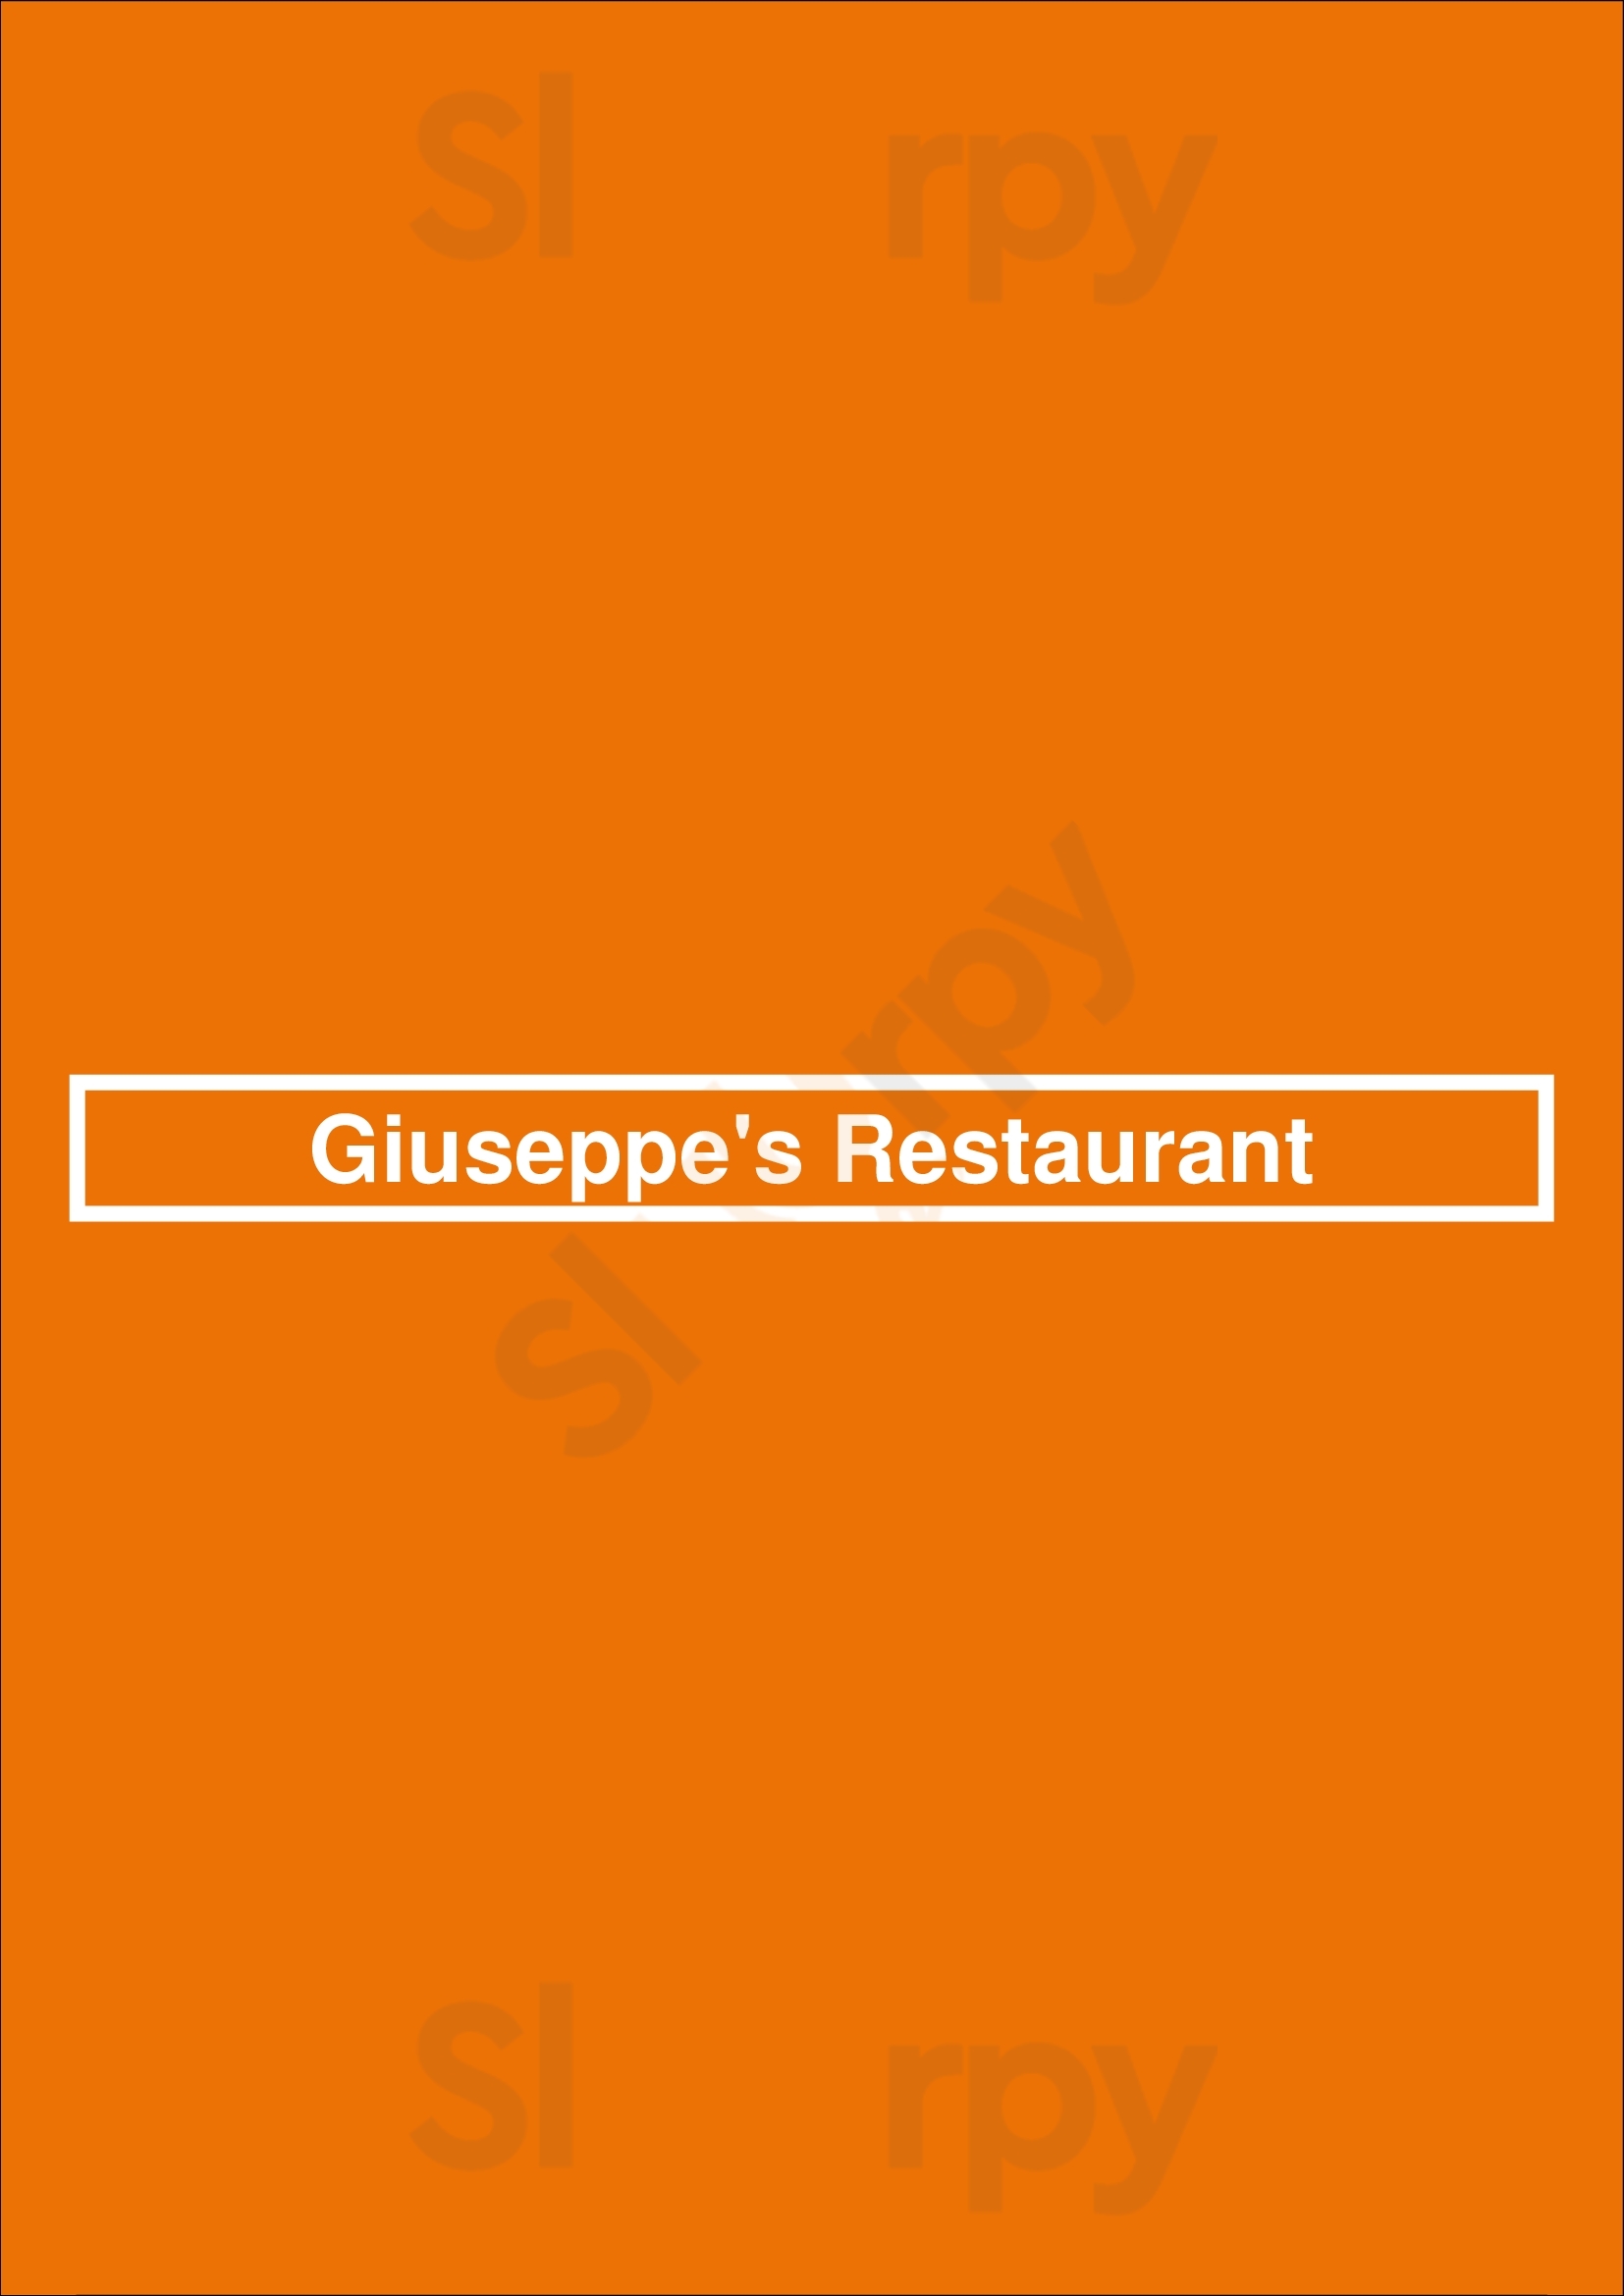 Giuseppe's Restaurant Chesterfield Menu - 1